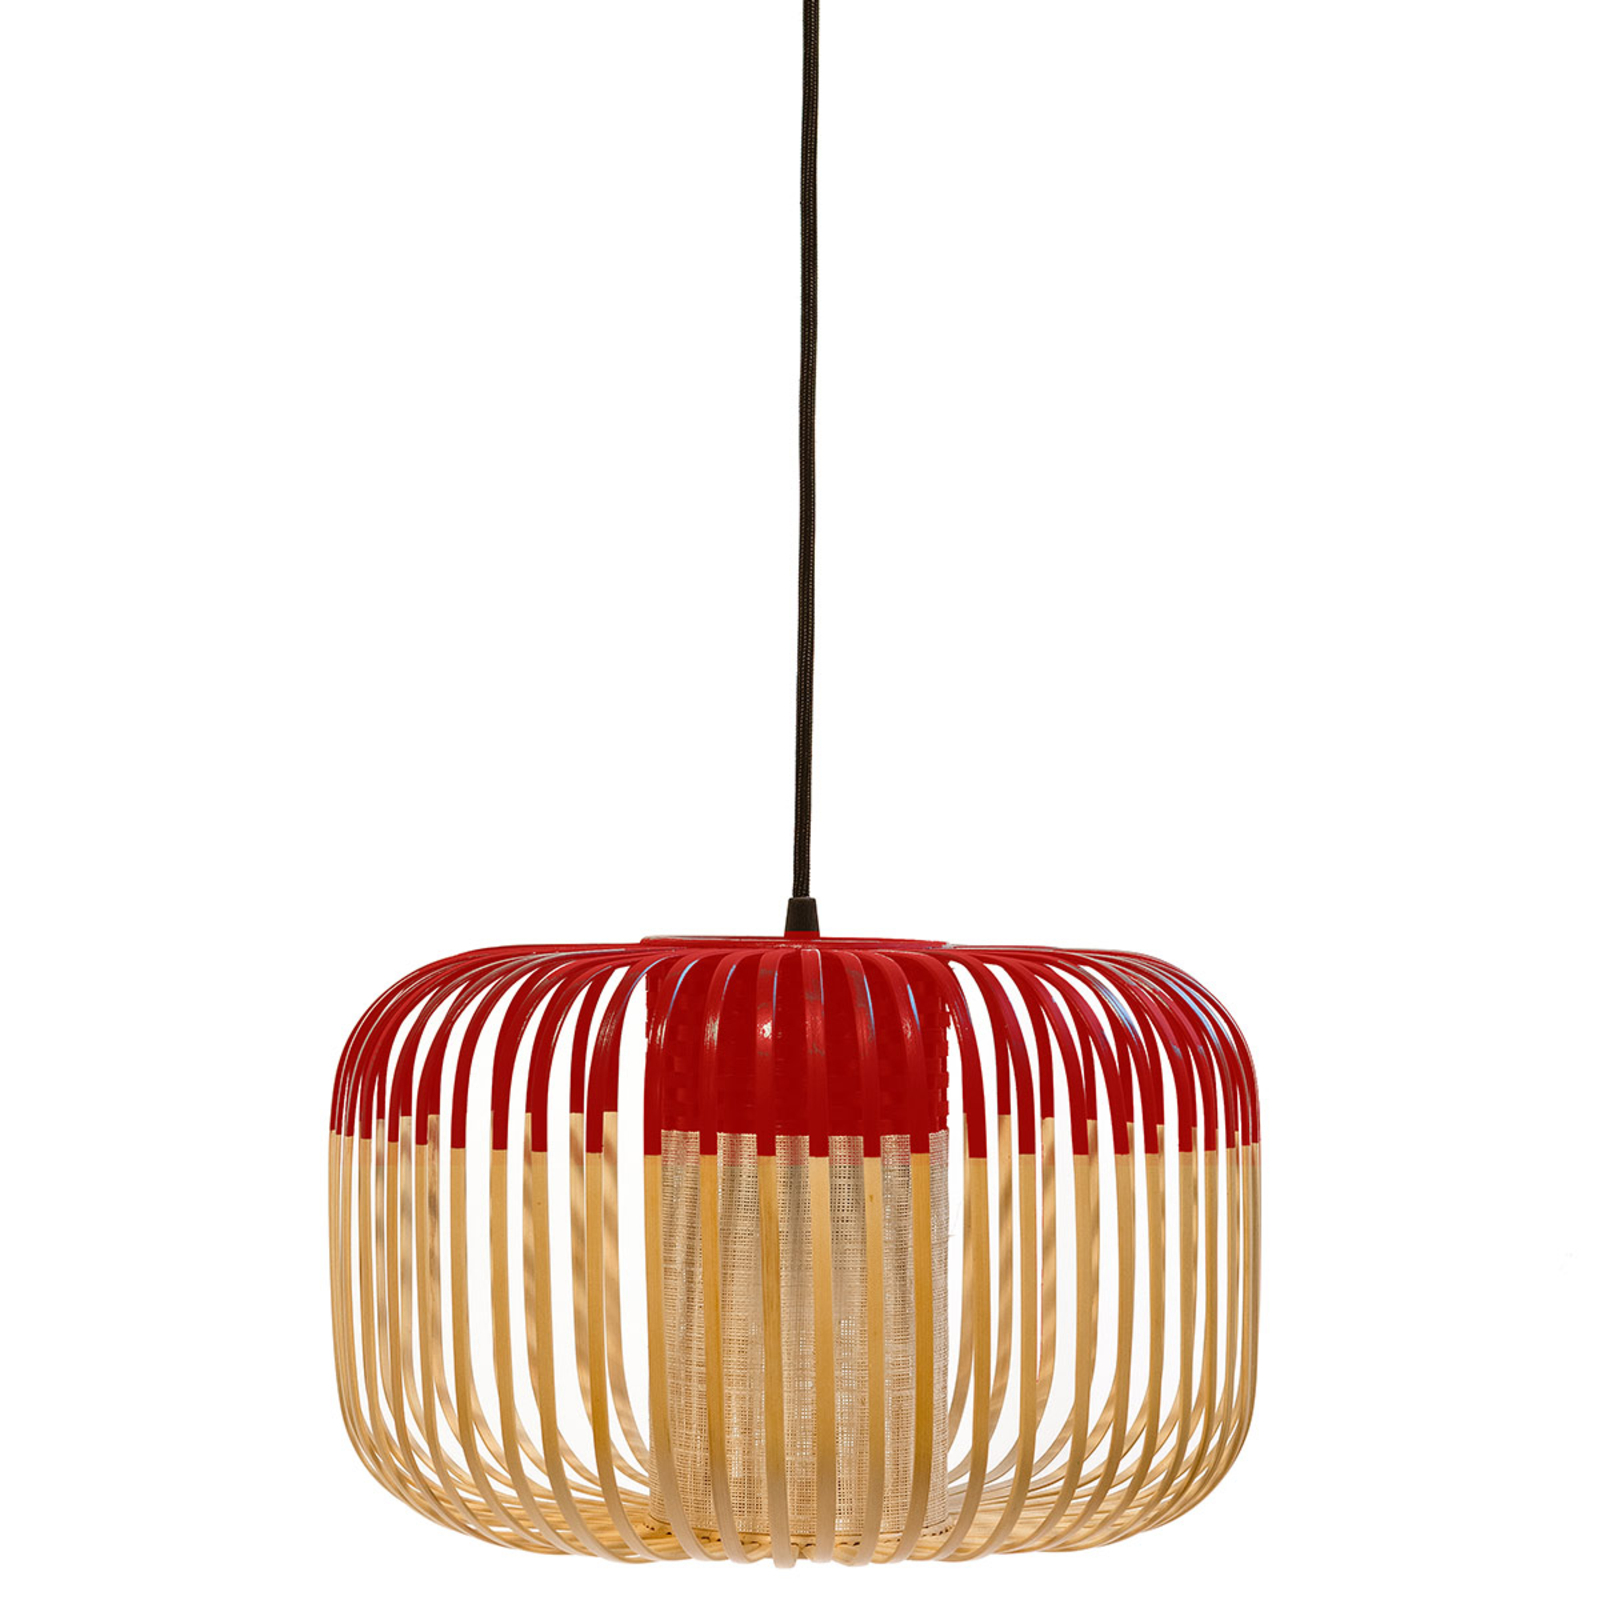 Forestier Bamboo Light S hanglamp 35 cm rood